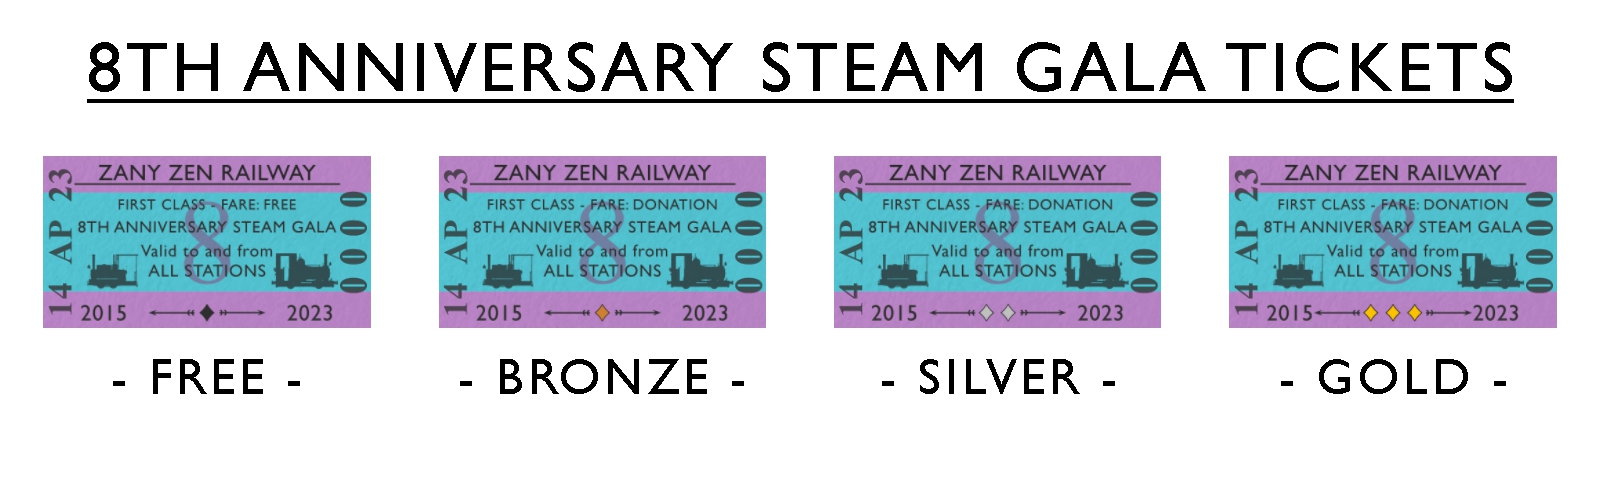 8th Anniversary Steam Gala Limited Edition Zany Zen Railway Tickets